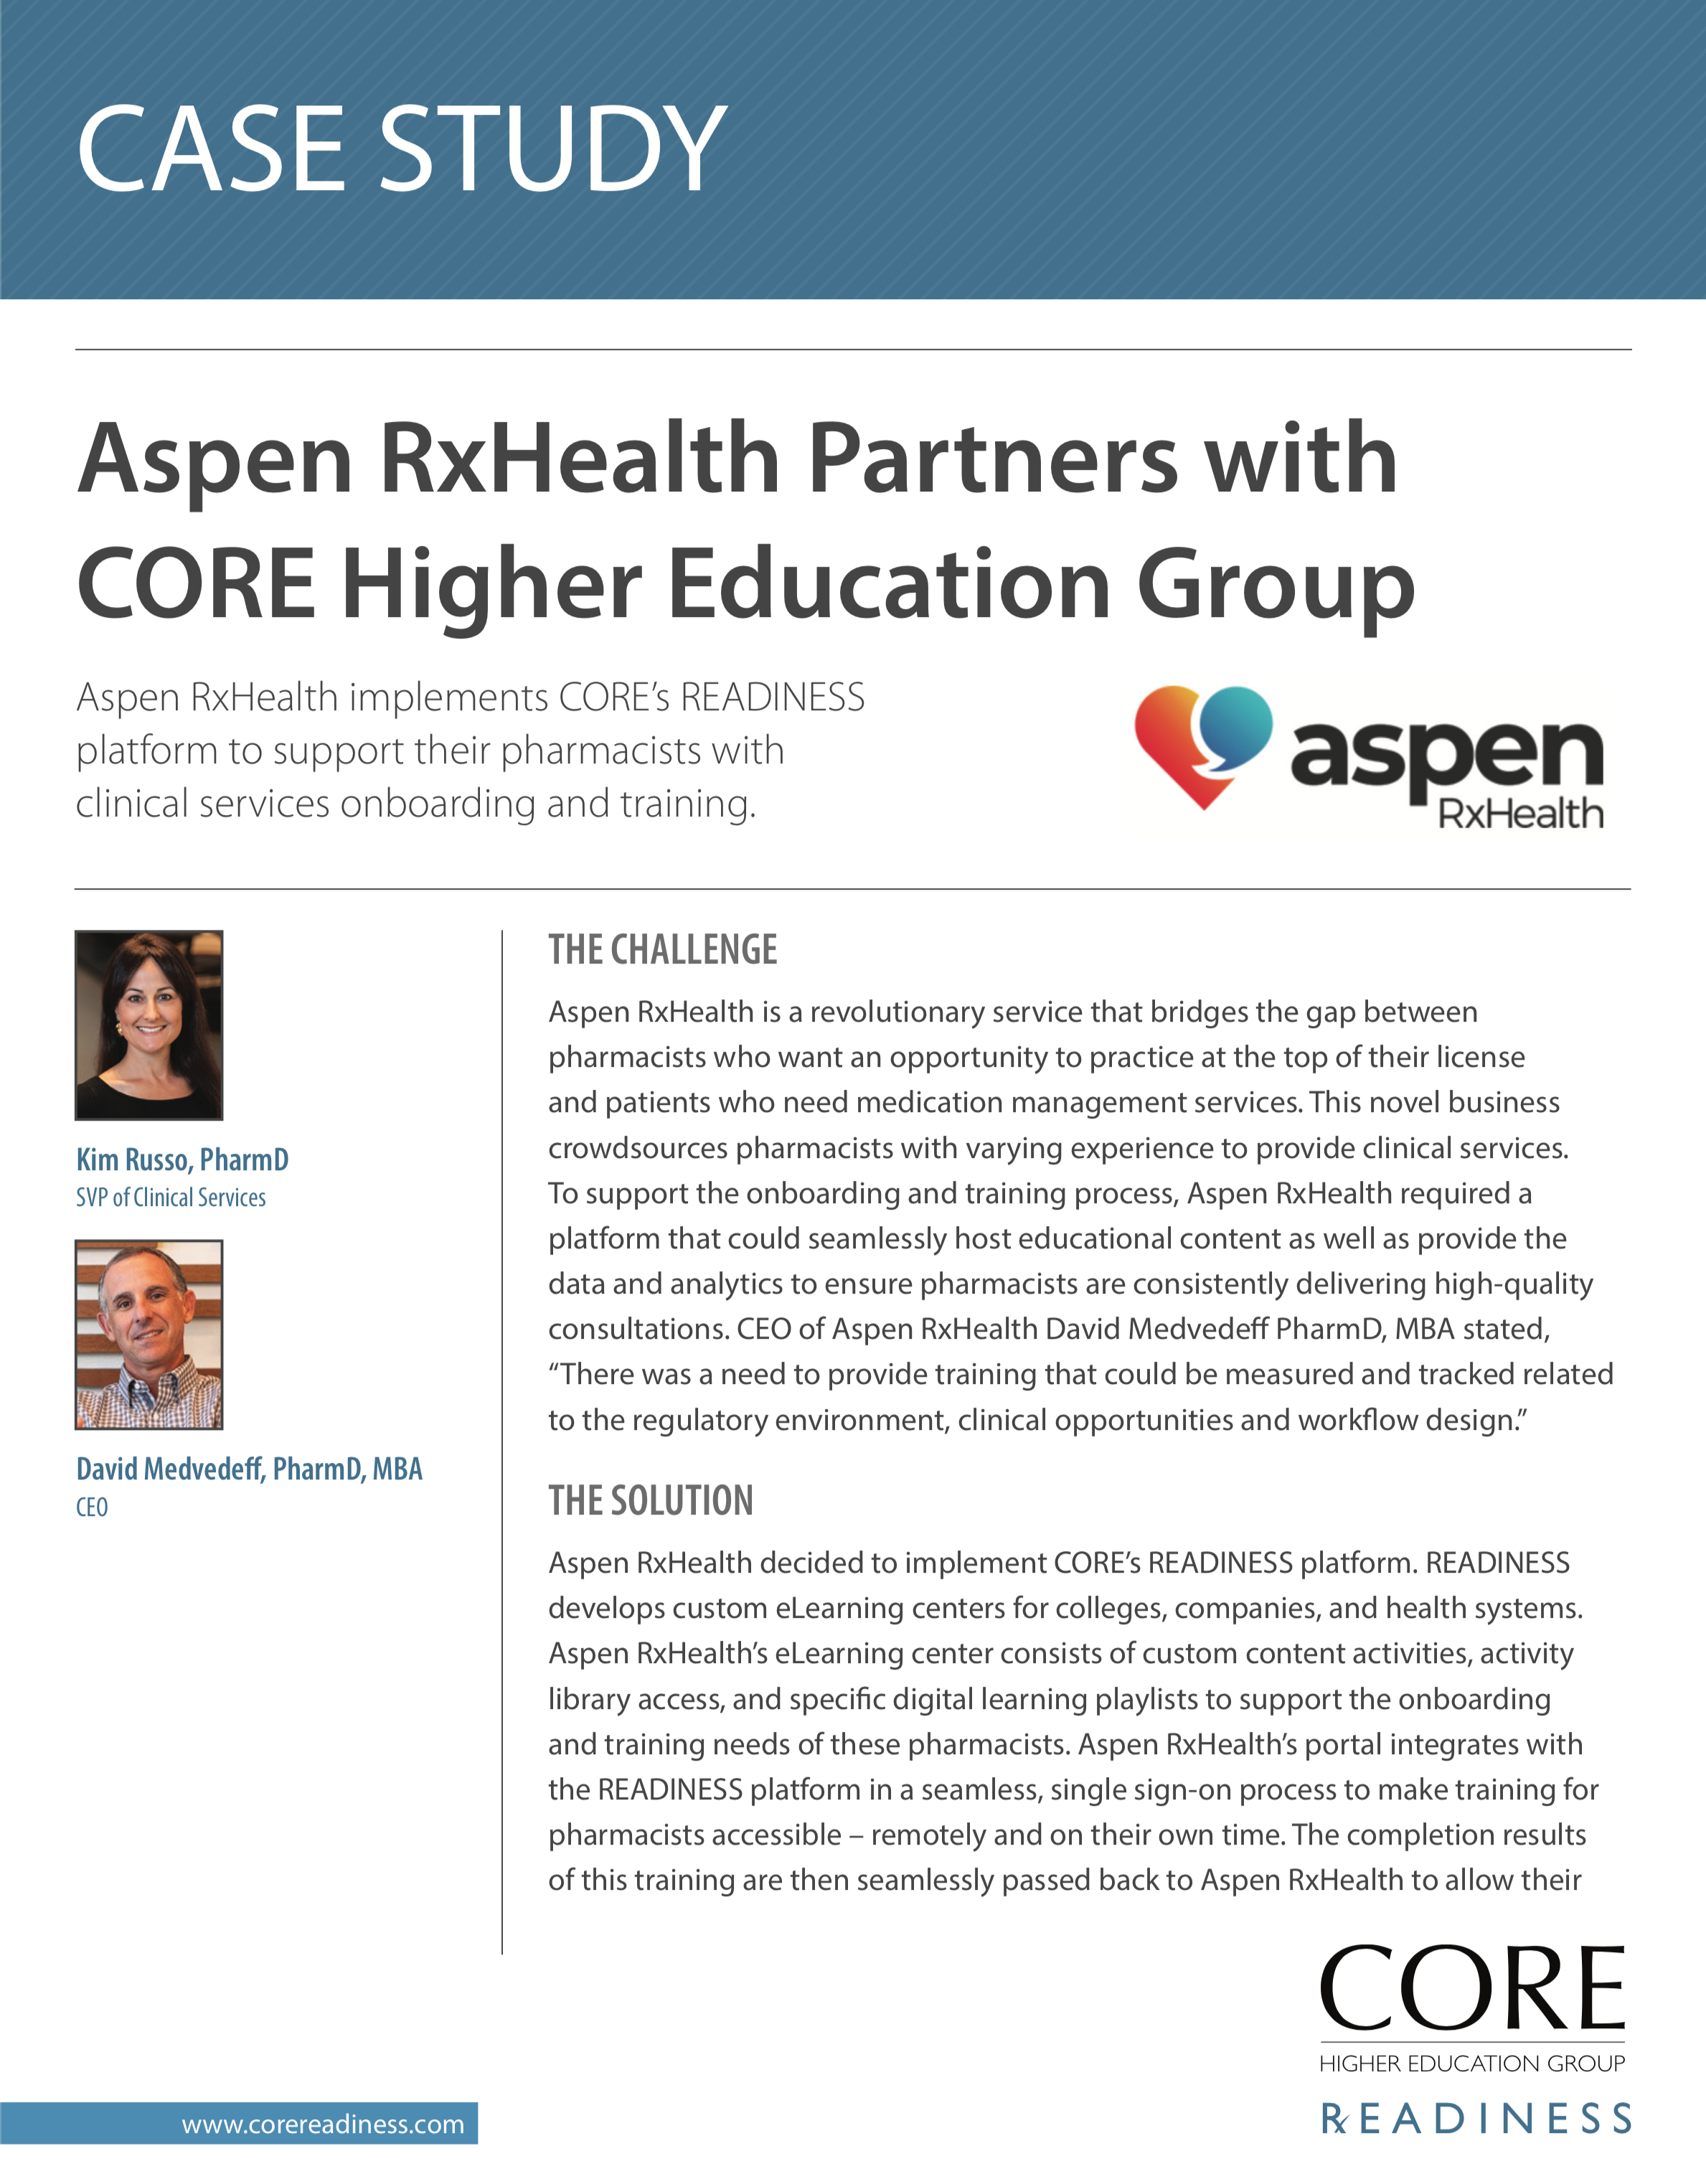 Case Study from Aspen RxHealth